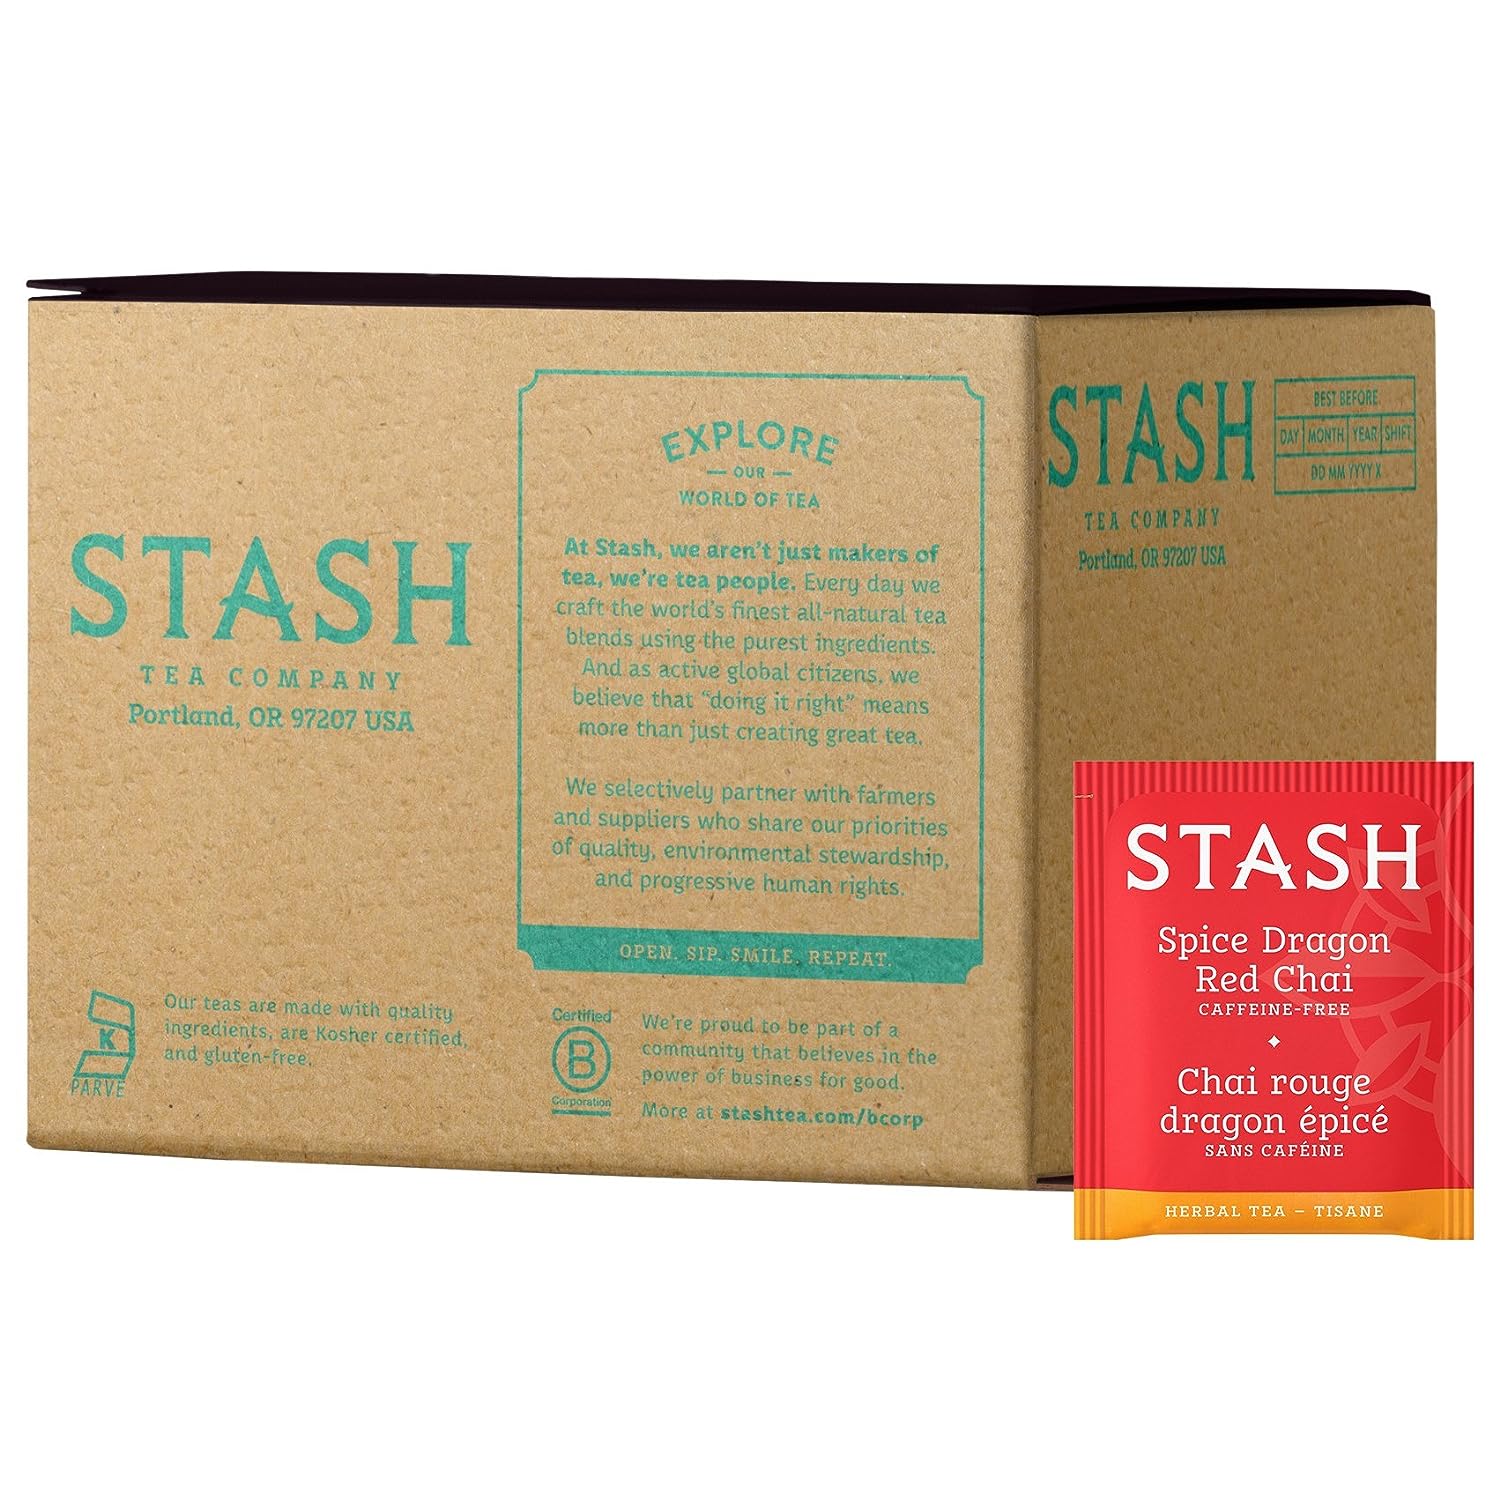 Stash Tea Spice Dragon Red Chai Herbal Tea, Box of 100 Tea Bags (Packaging May Vary)